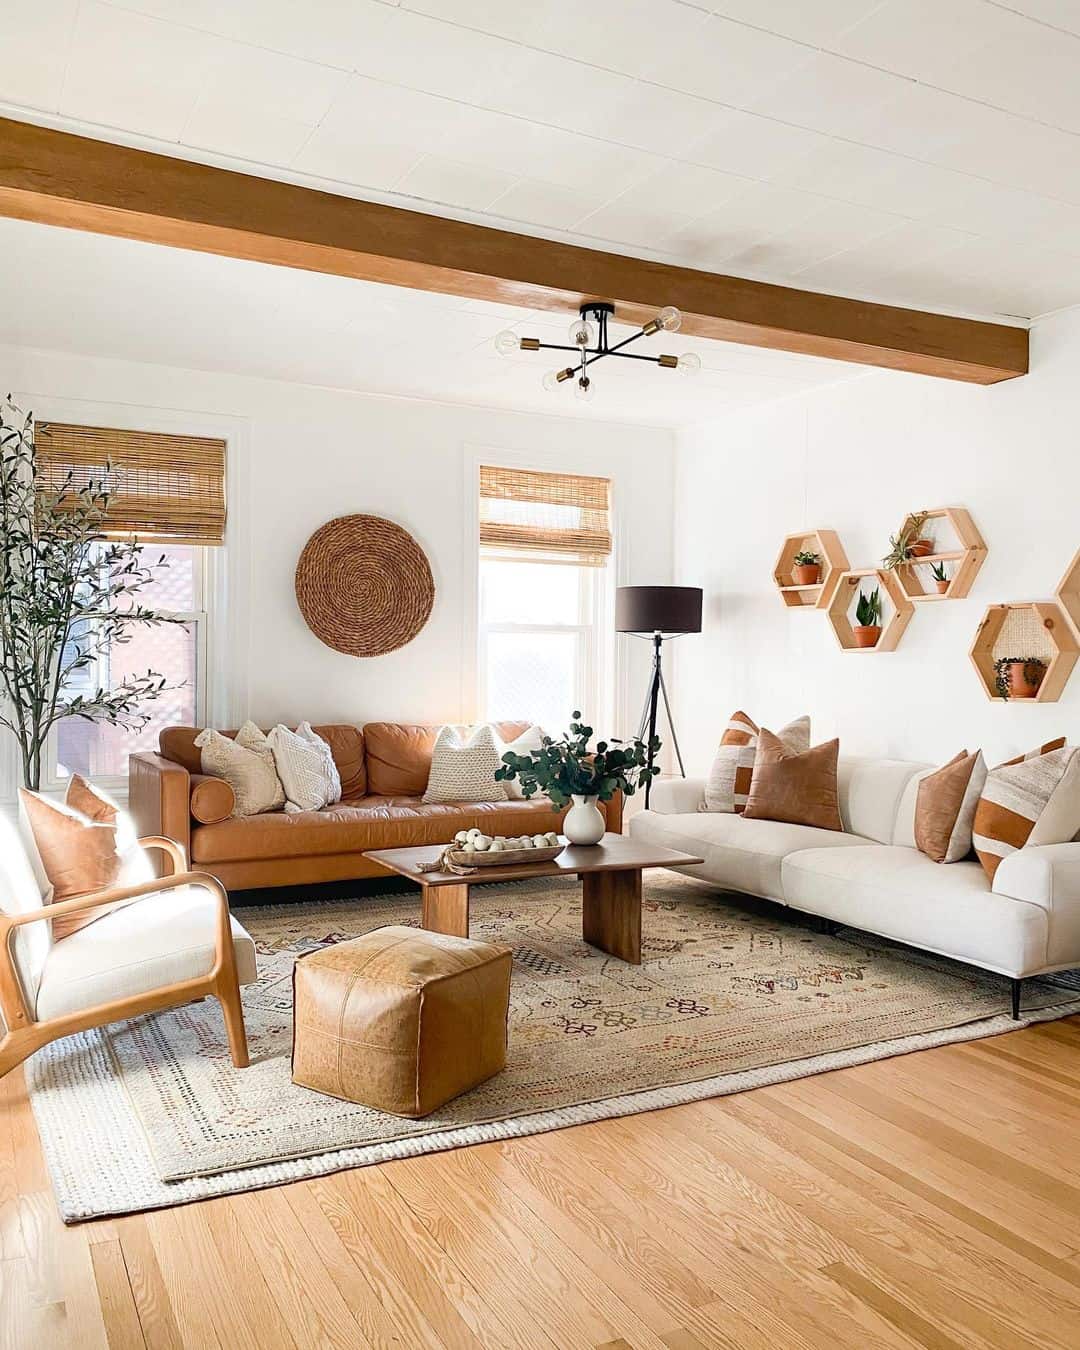 Living Room Ceilings With Faux Exposed Wood Beams - Soul & Lane